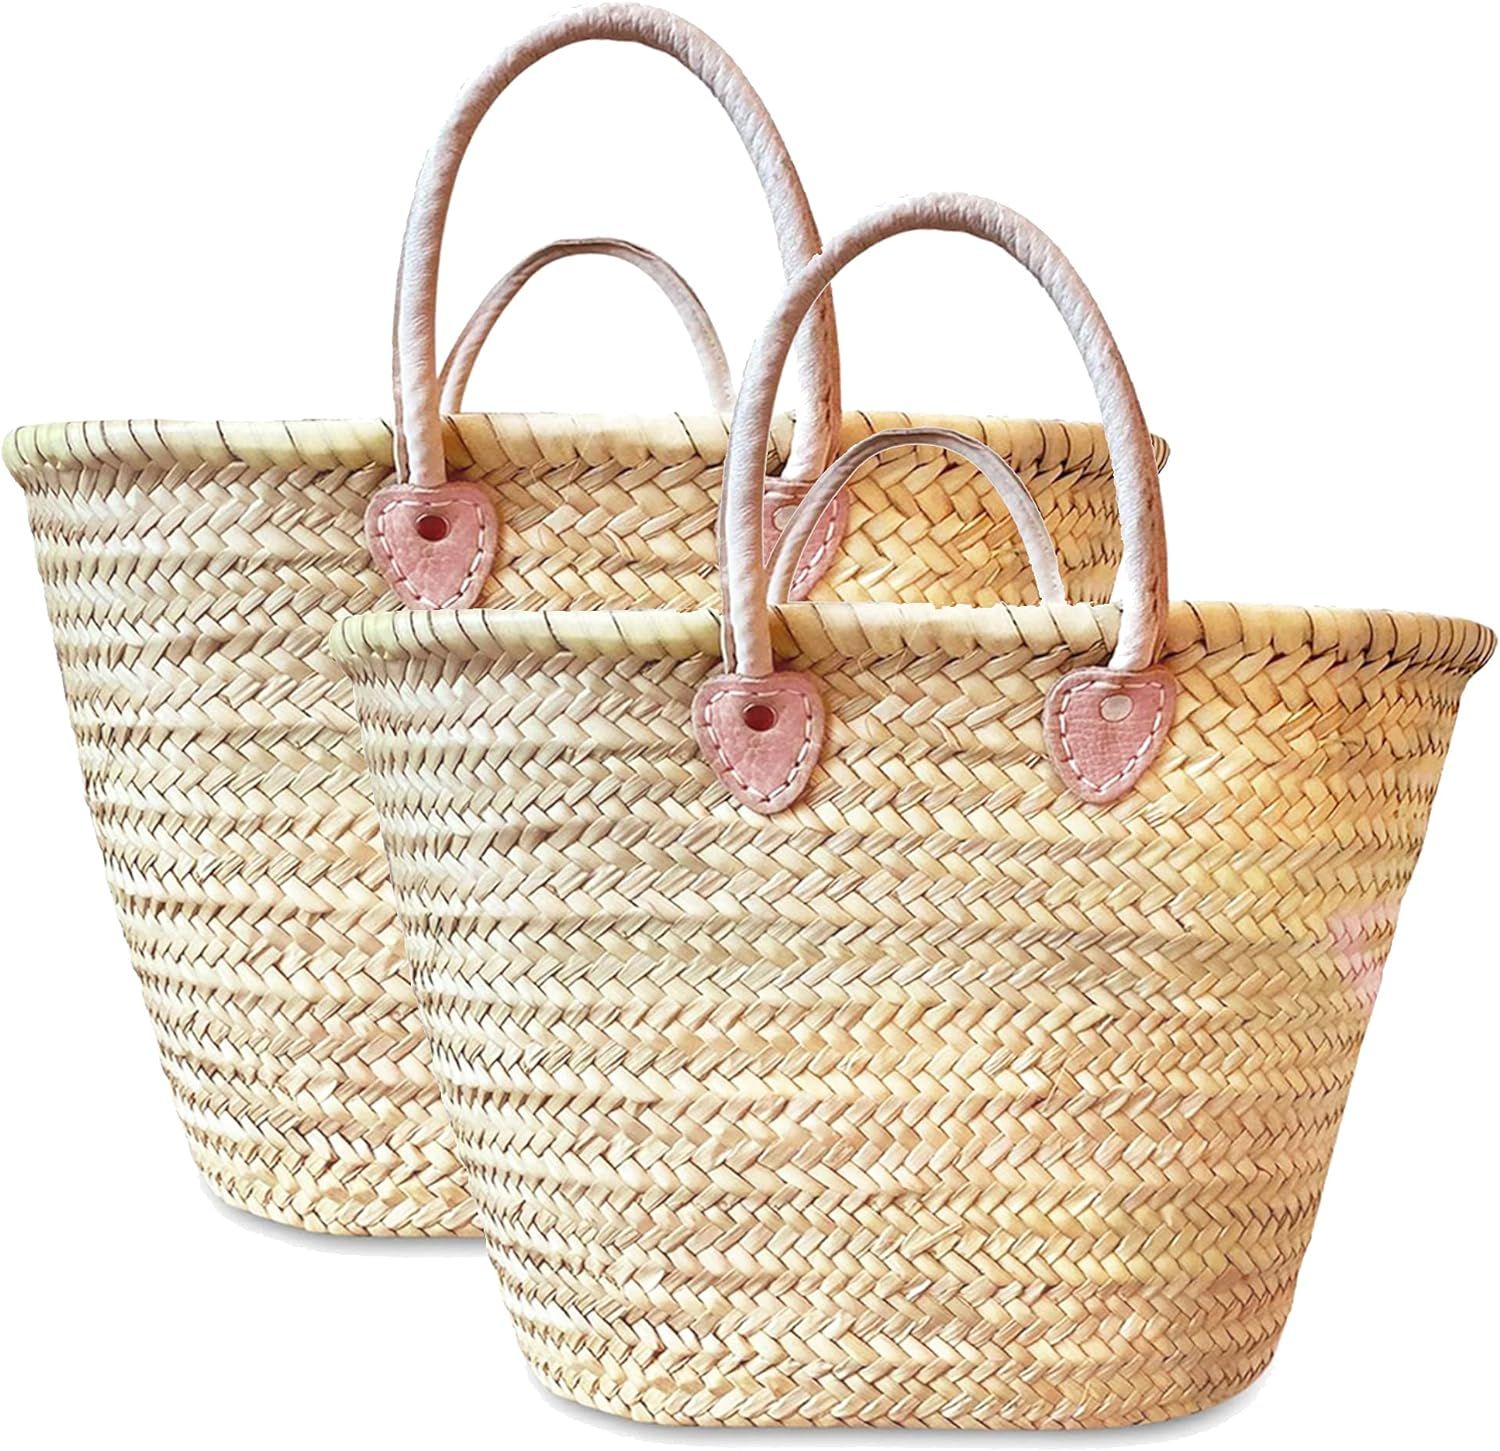 French Market Basket Bag | Handmade Moroccan Seagrass Baskets - Set of 2 Medium (15x10) | Wicker ... | Amazon (US)